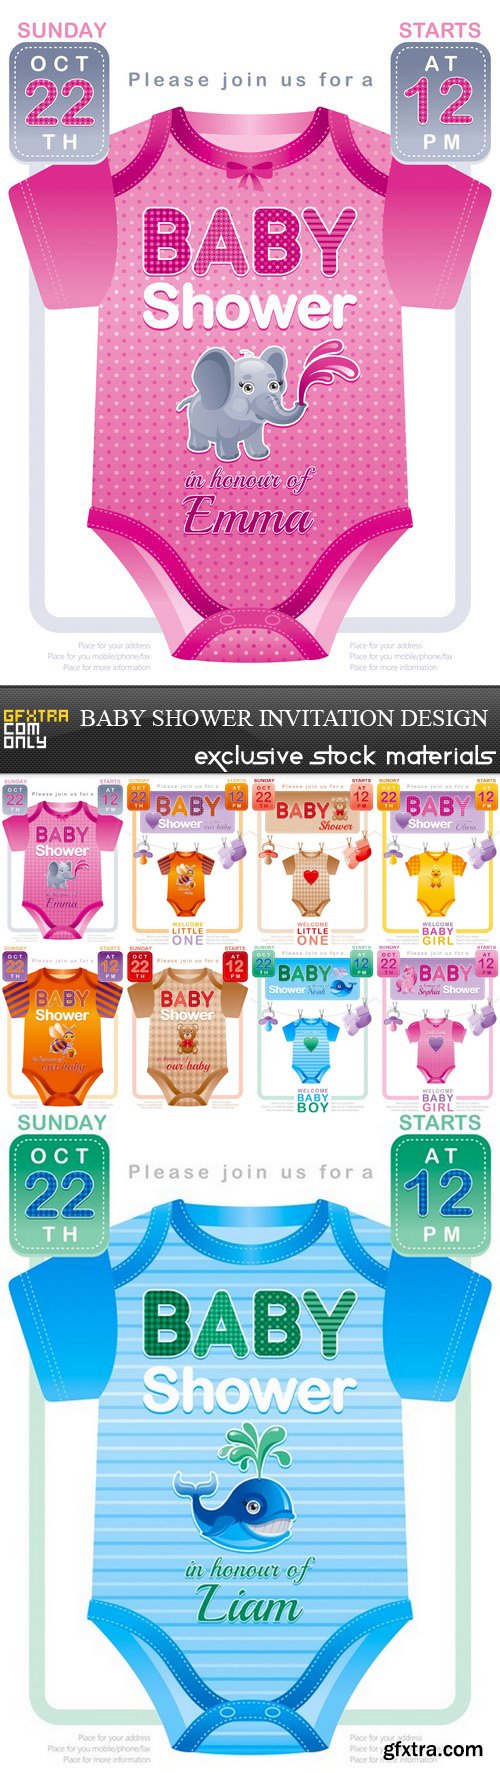 Baby Shower Invitation Design - 9 EPS